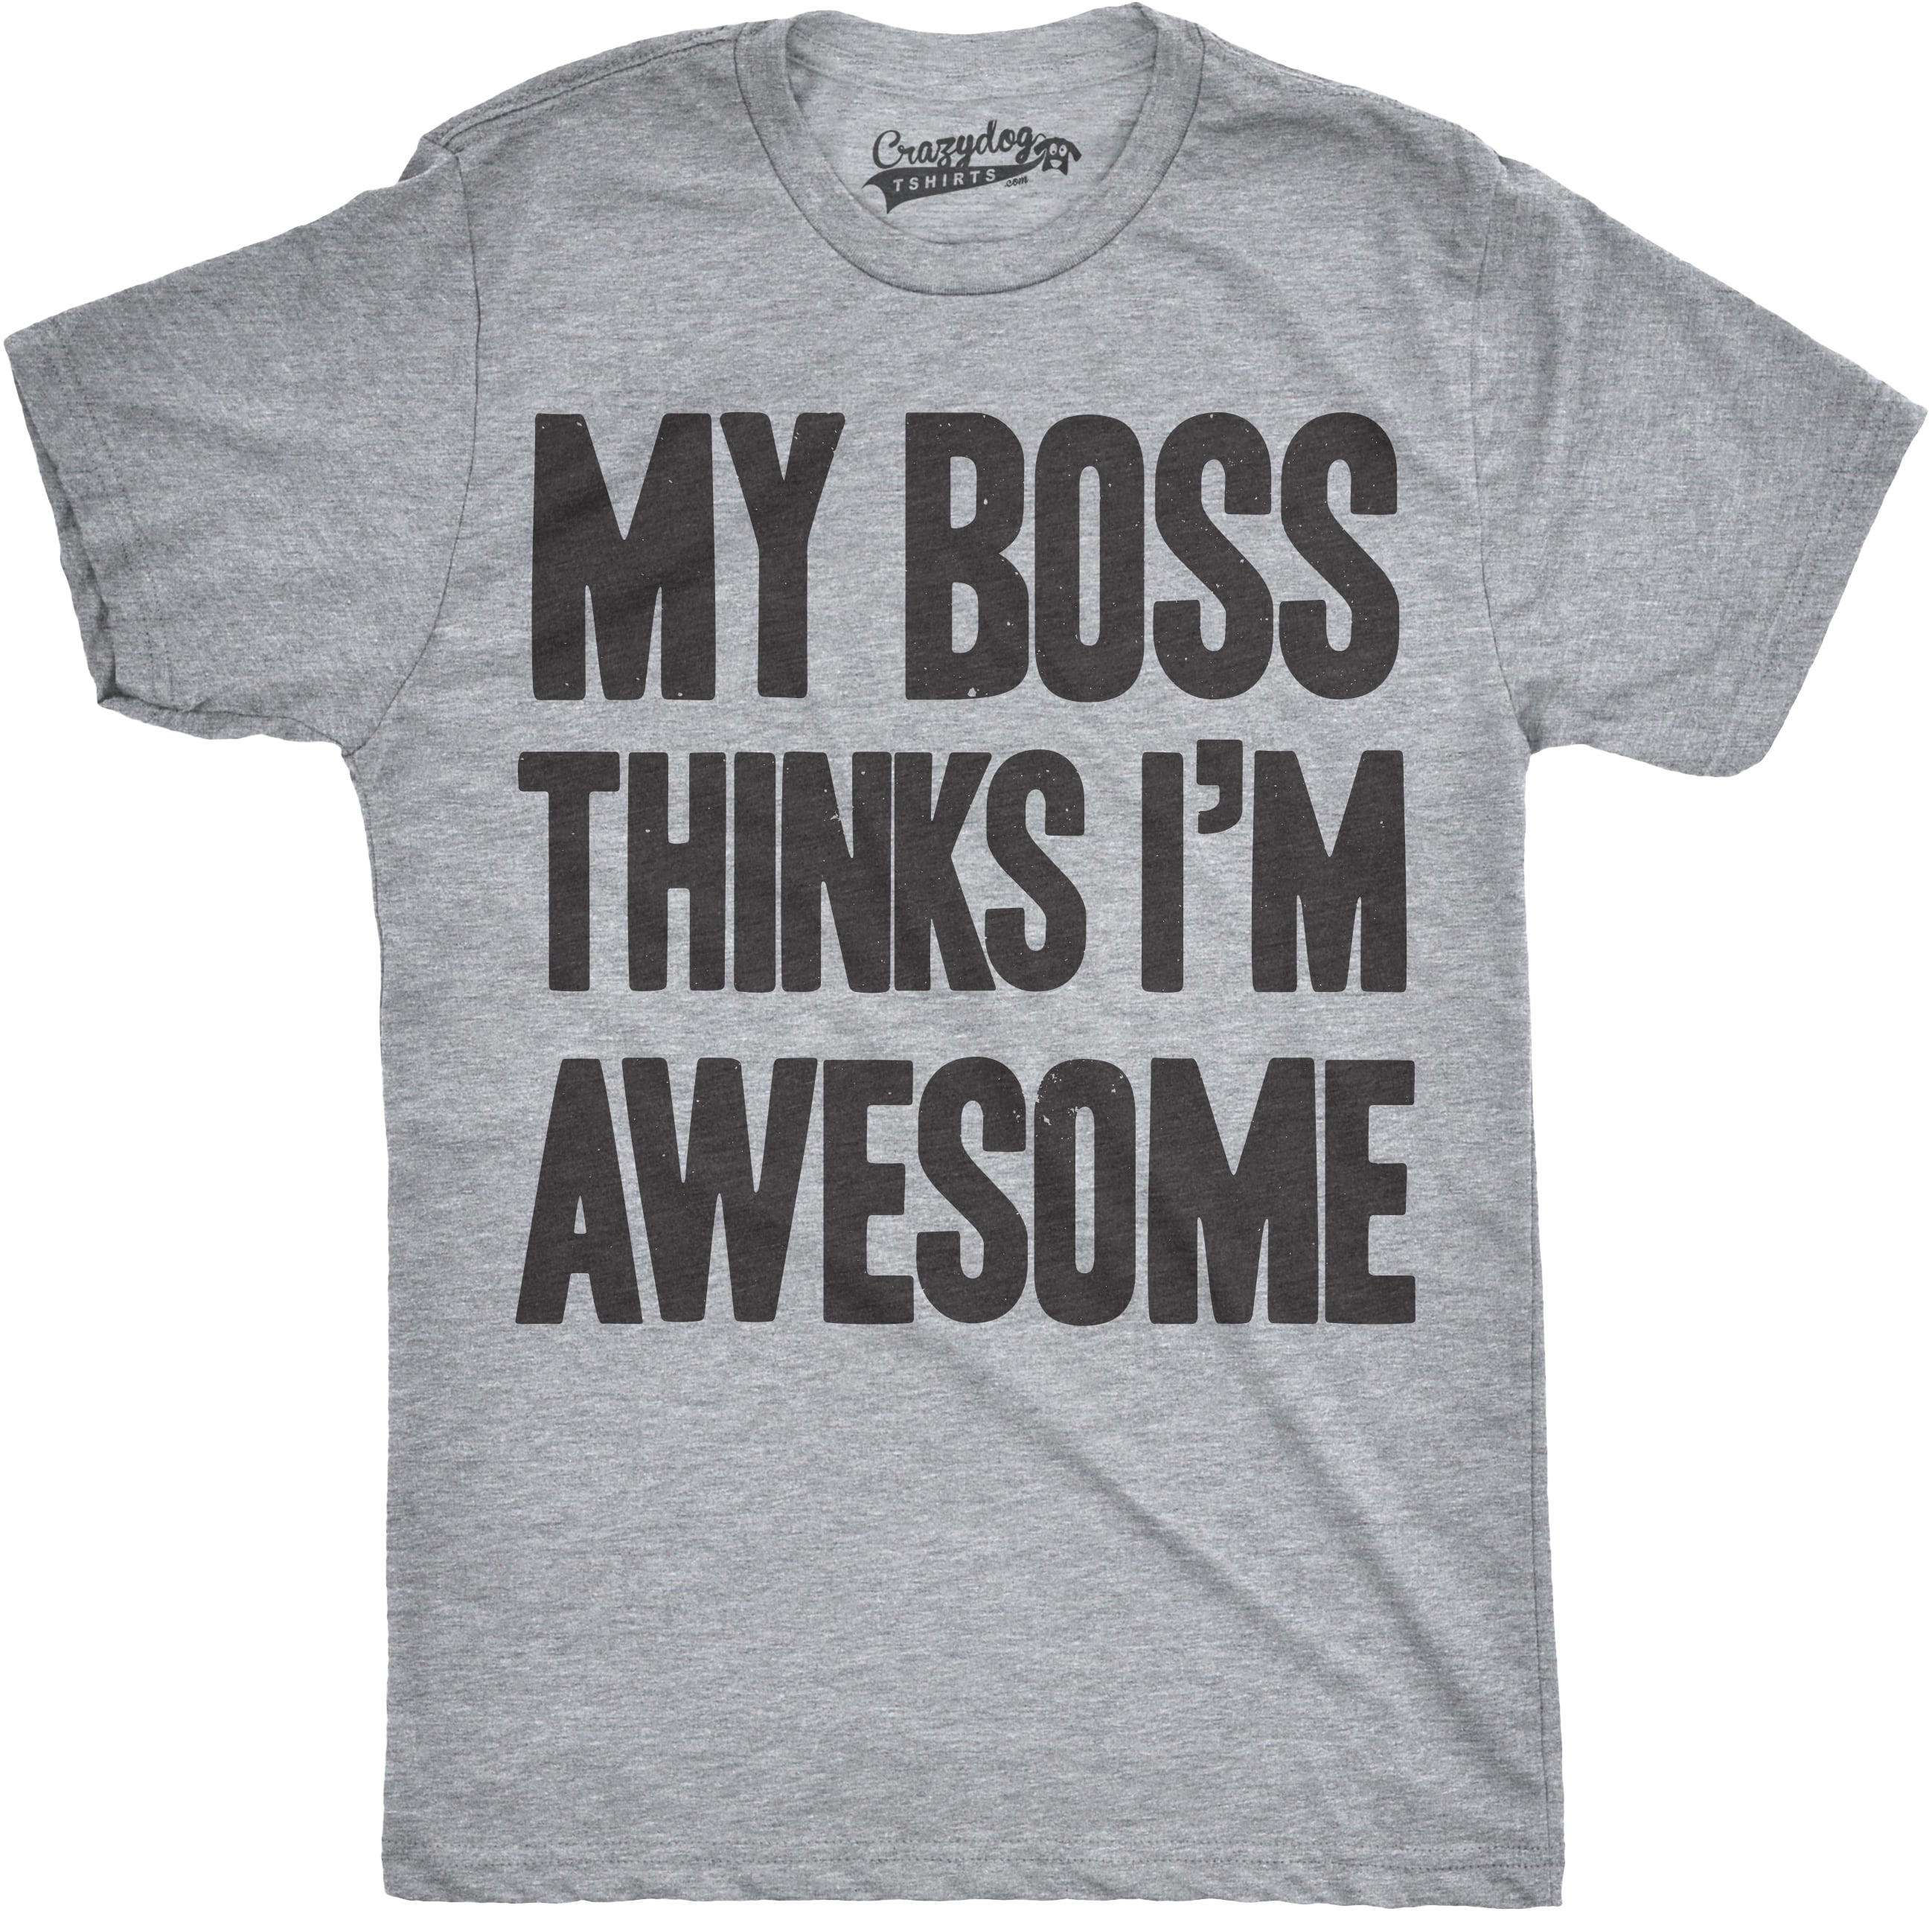 Mondays Should Be Optional Shirt Teacher Shirts Funny Shirts Humor Shirt Funny Office Work T-Shirt Boss Coworker Gift Mom Shirts